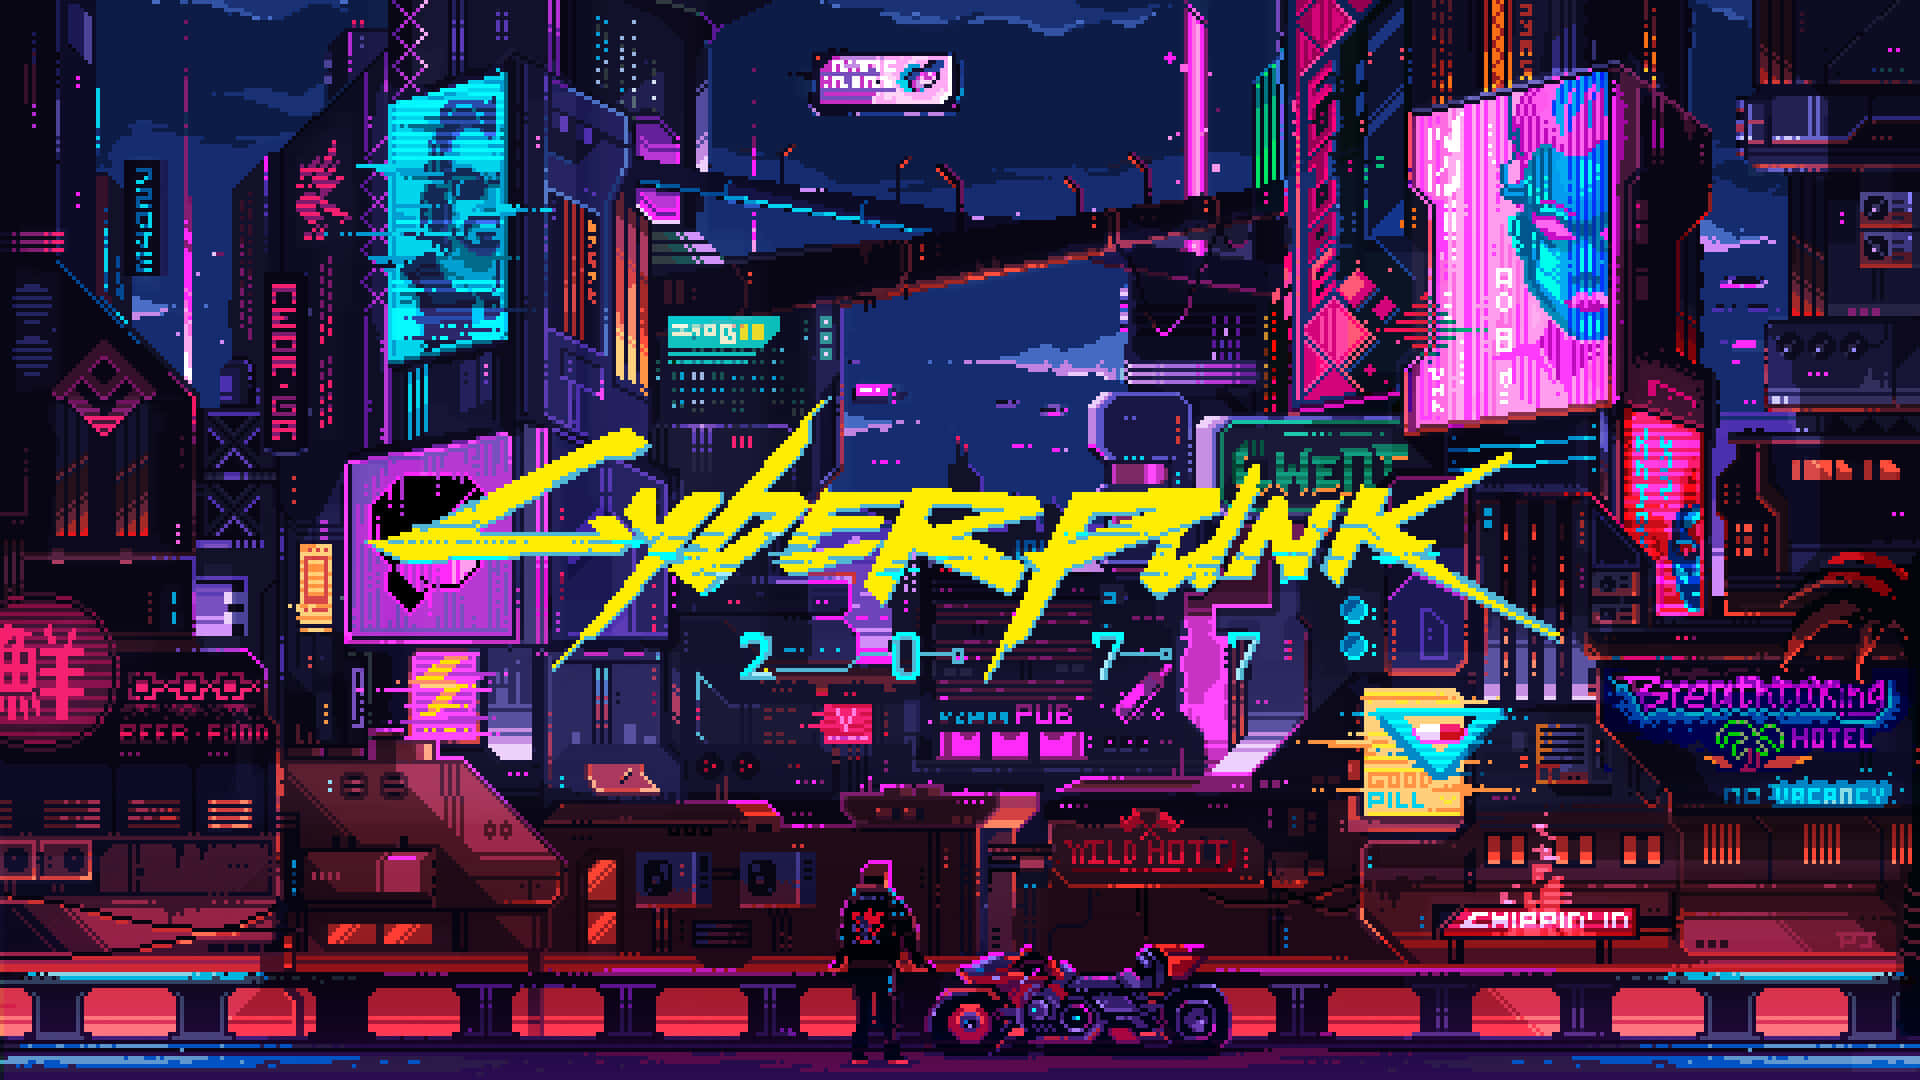 3840x2160] Pixel Cyberpunk by VirtuaVerse artist Valenberg : r